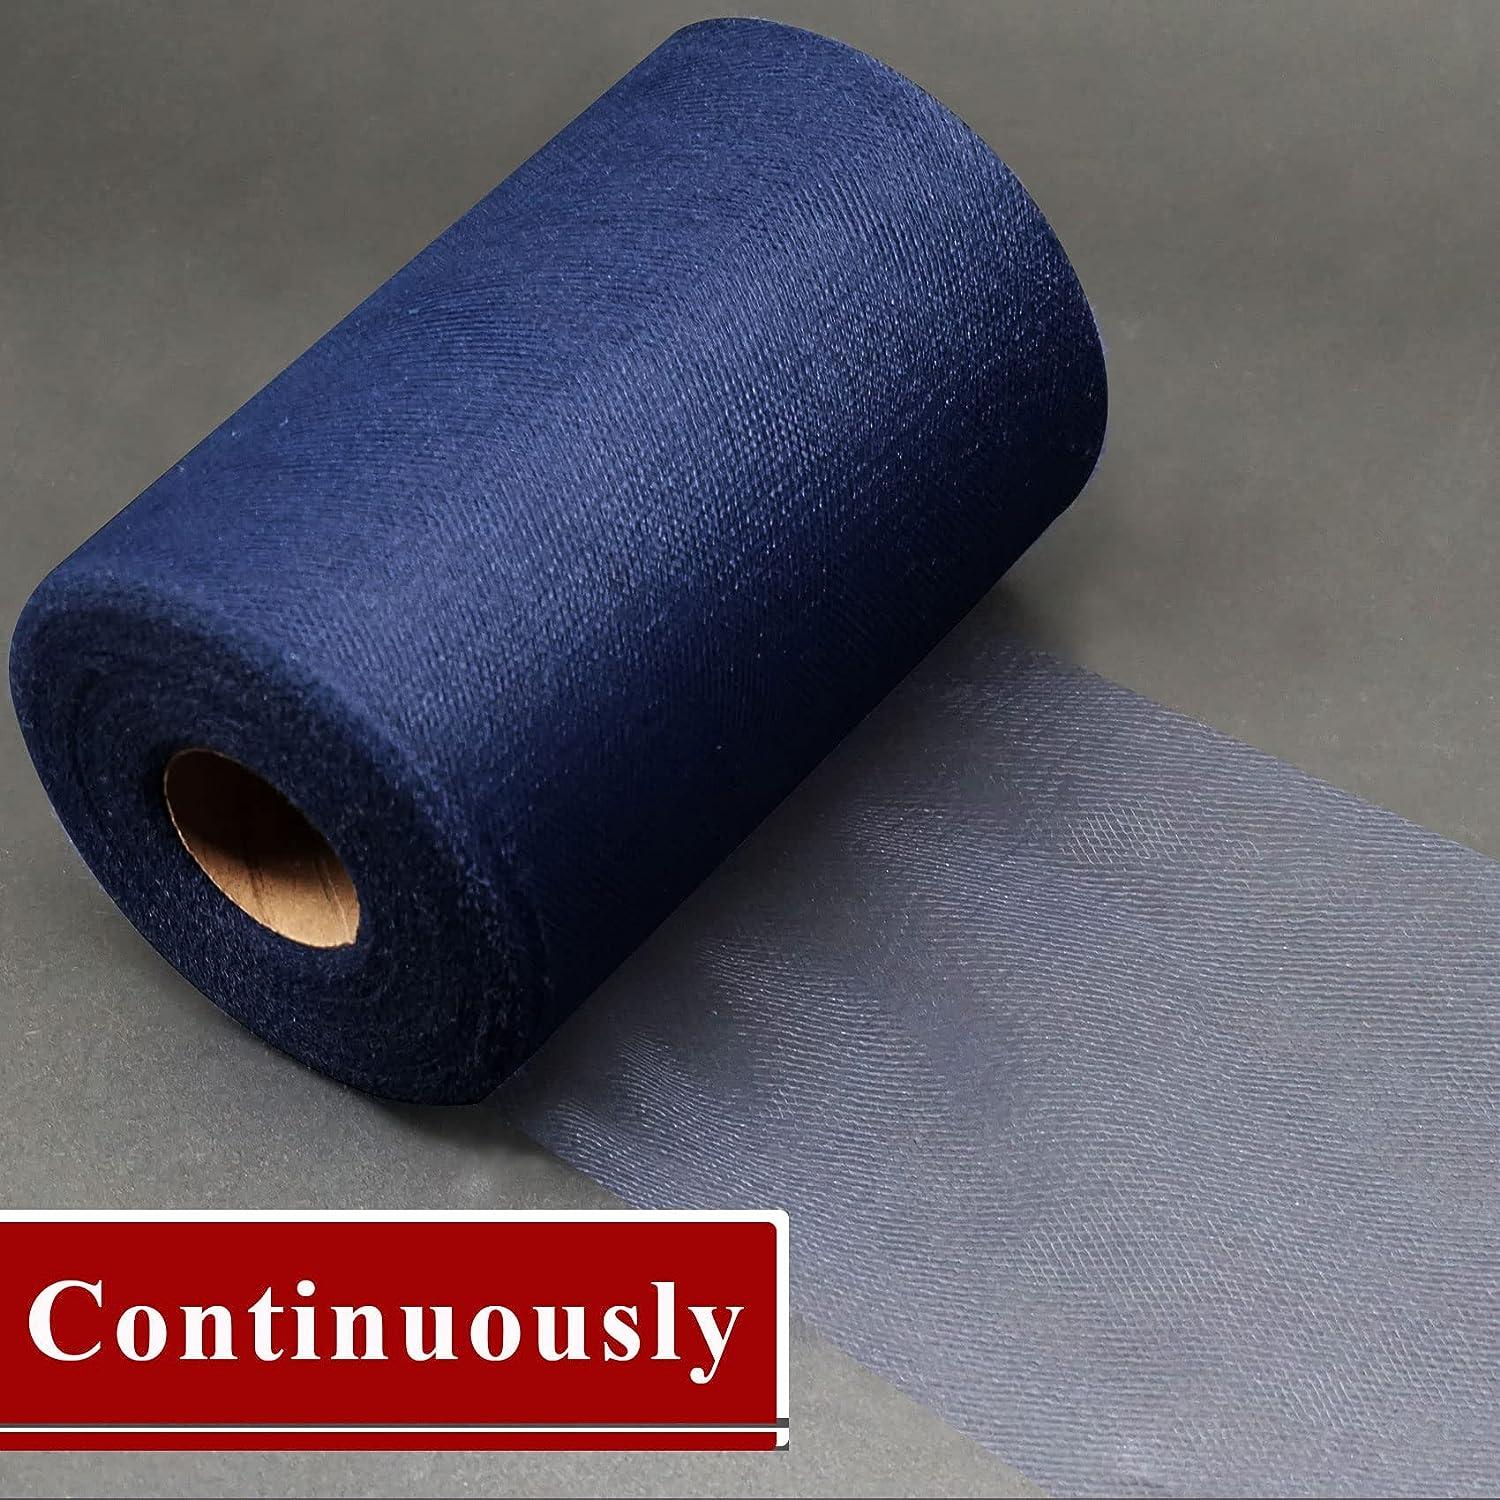 6 inch 50 Yards Tulle Ribbon Rolls Pastel Netting Fabric, Blue